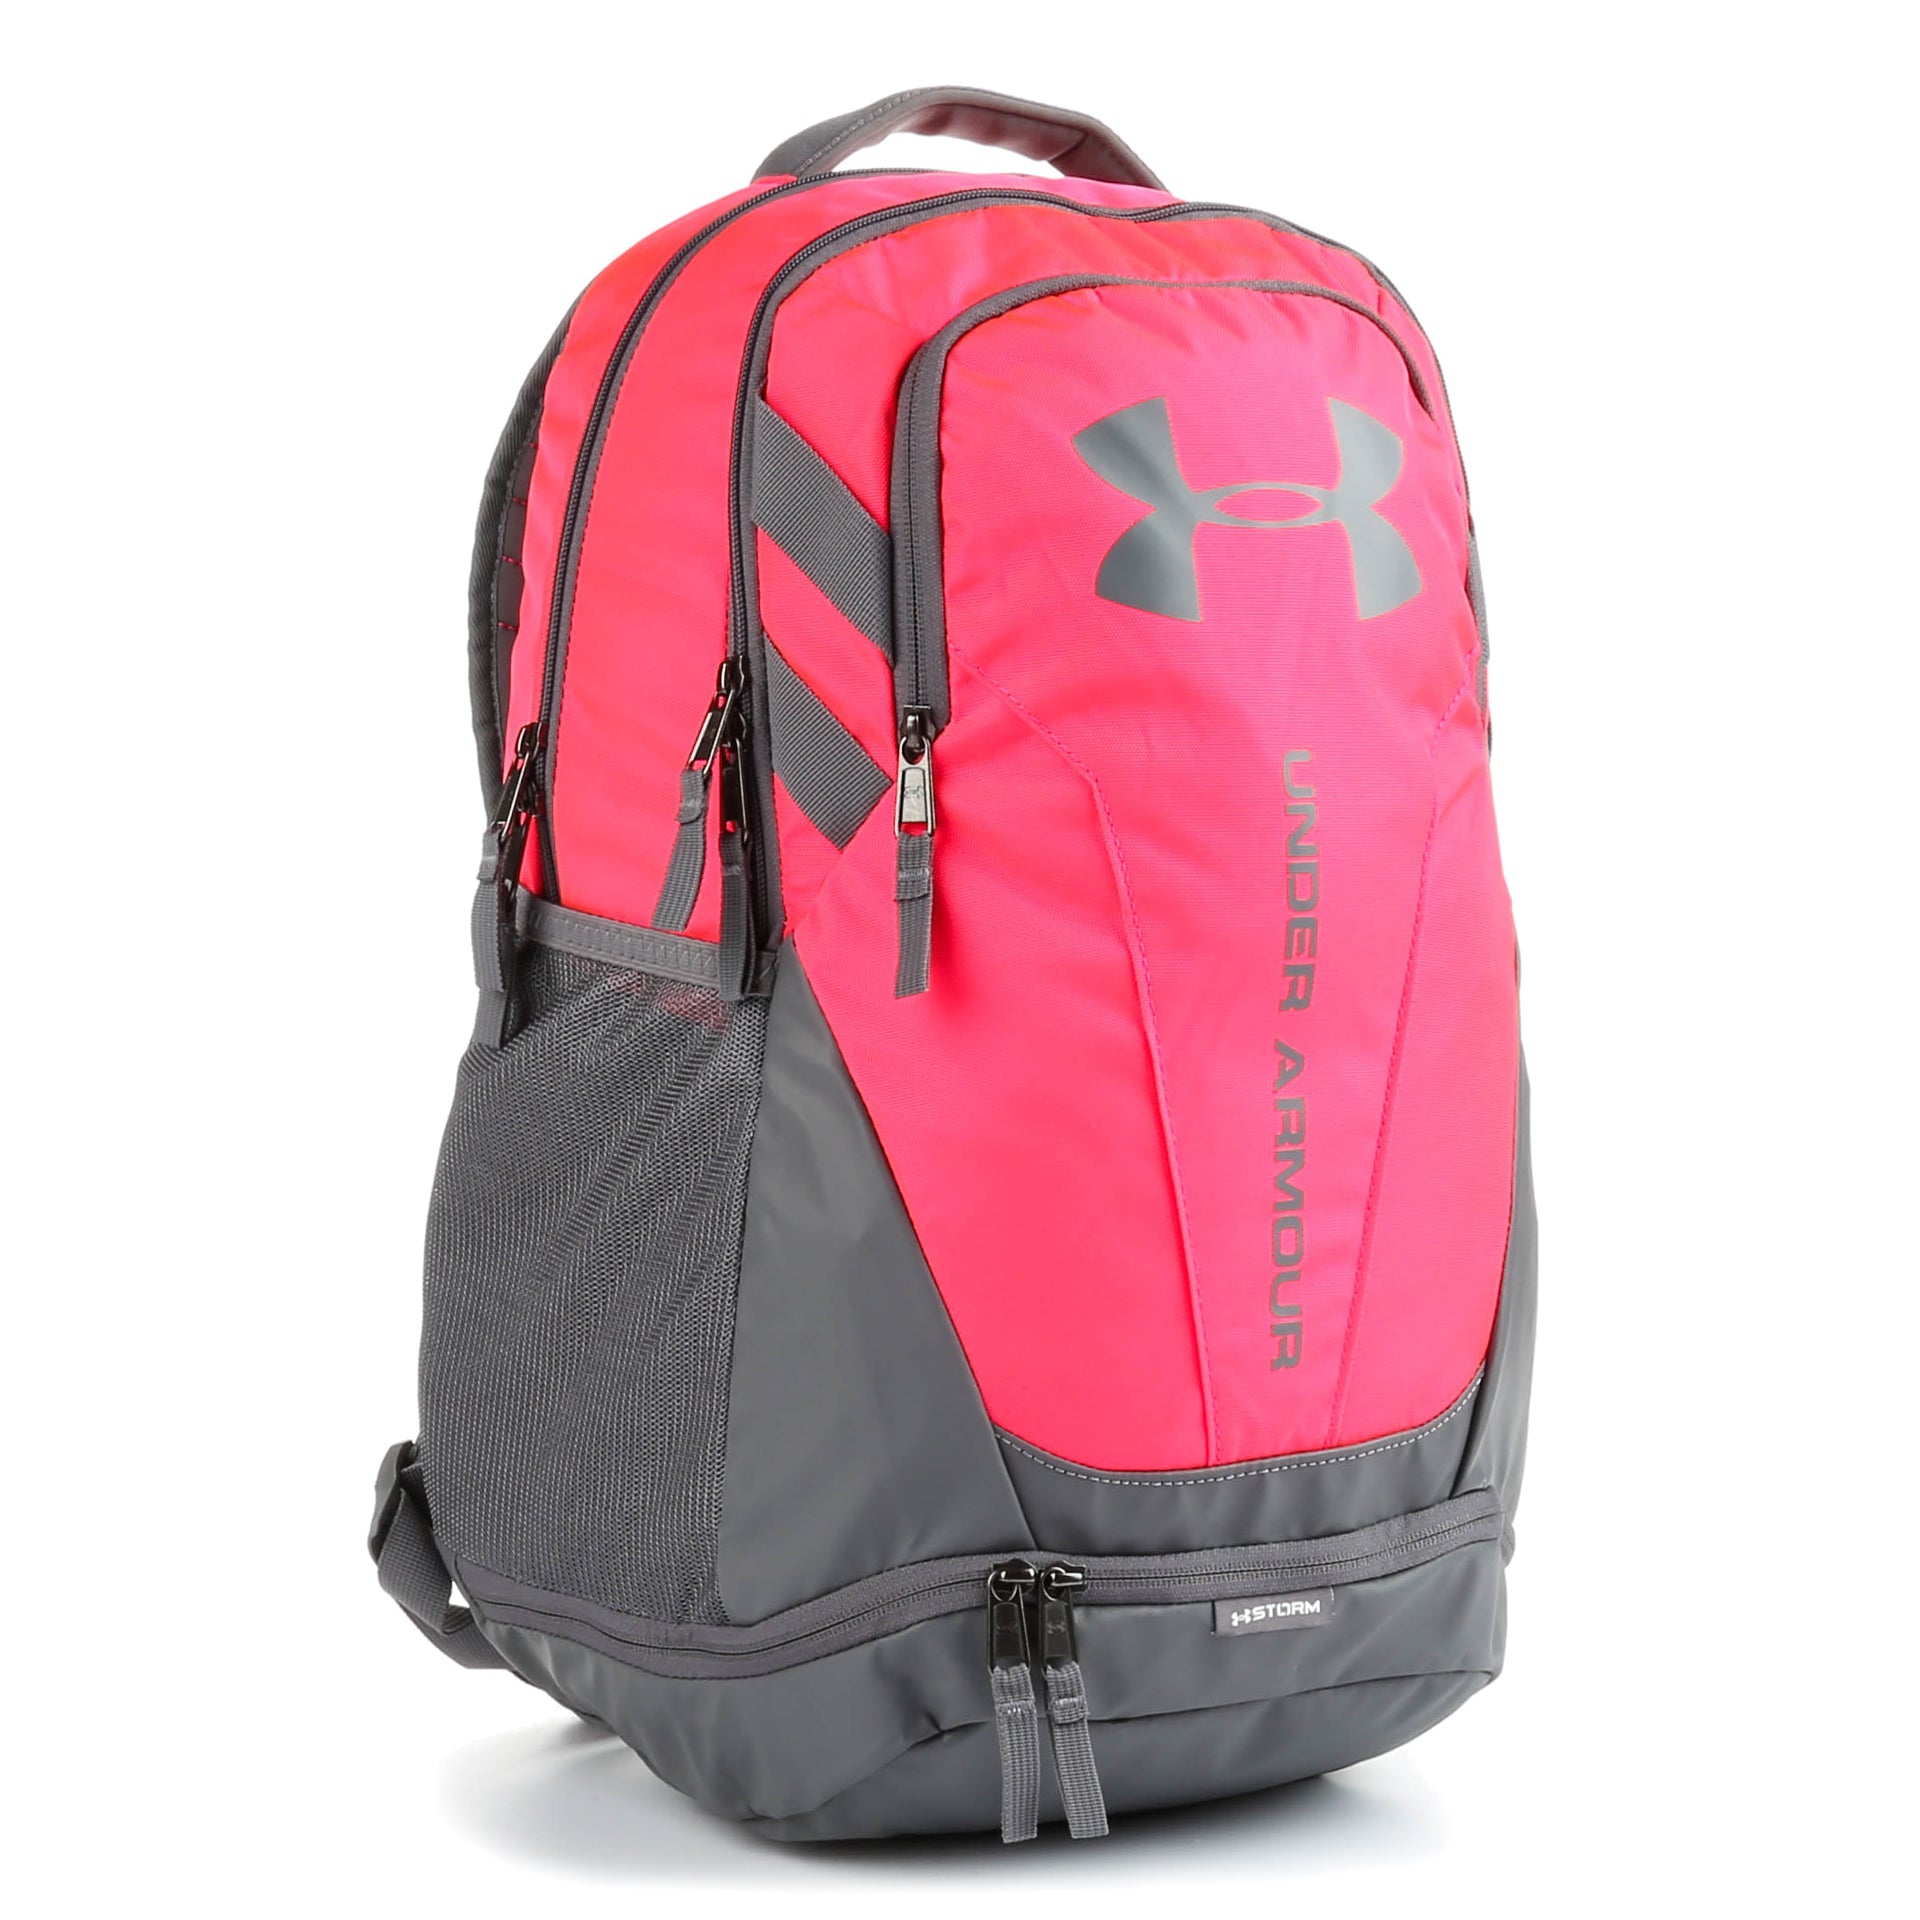 Araña rizo Separar Under Armour Hustle 3.0 Backpack - Penta Pink / Graphite - New Star